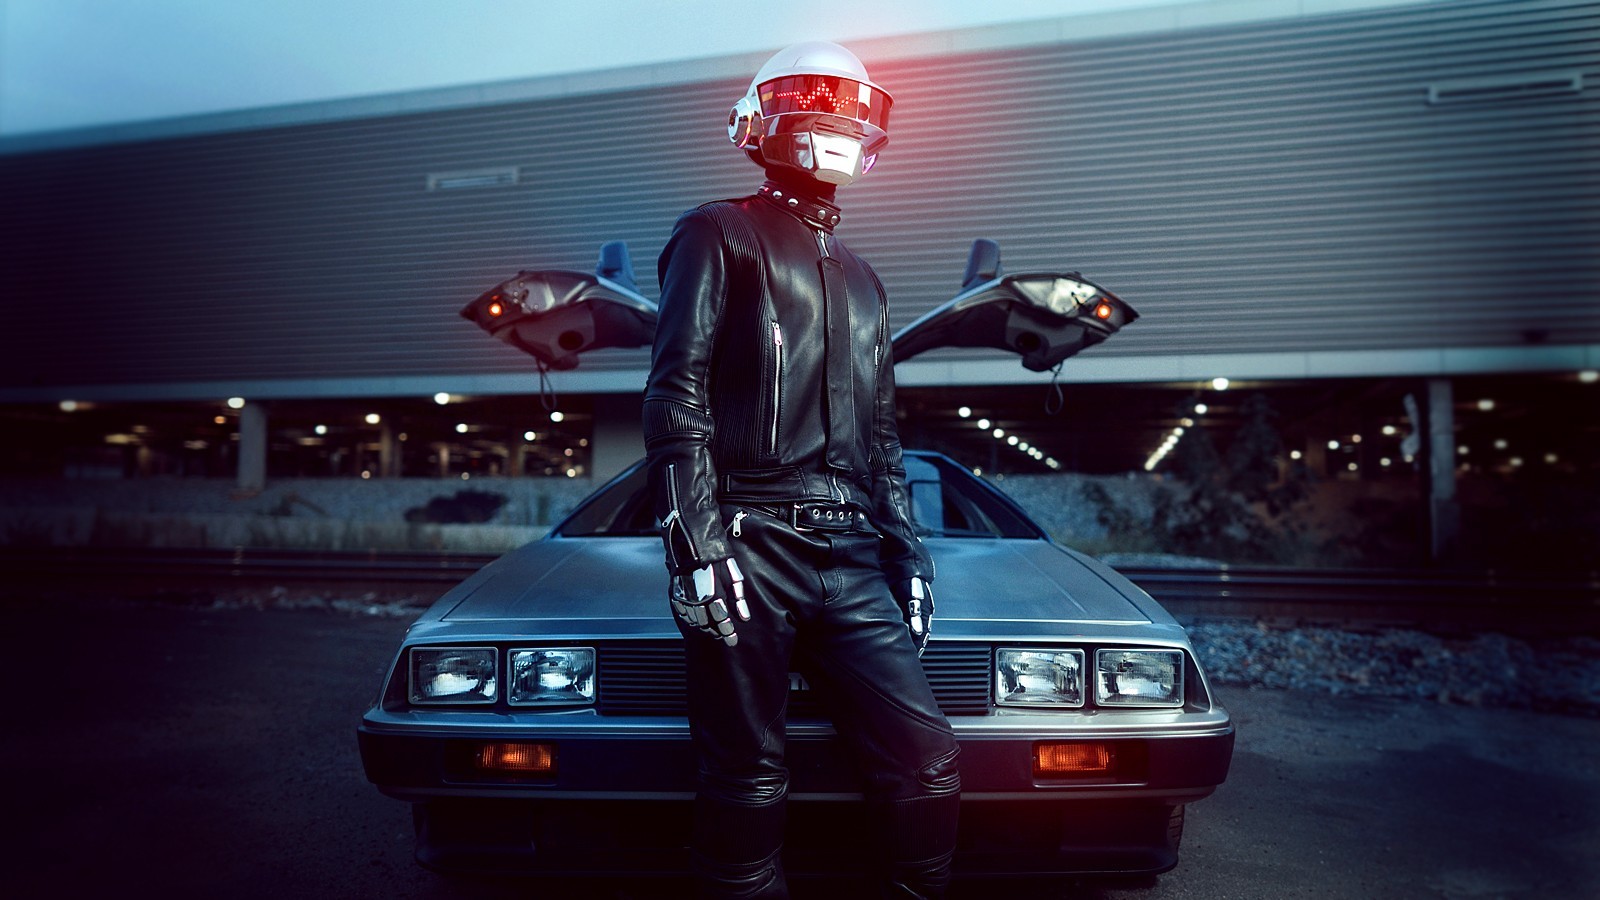 People 1600x900 Daft Punk DeLorean car robot electronic music music silver cars vehicle musician